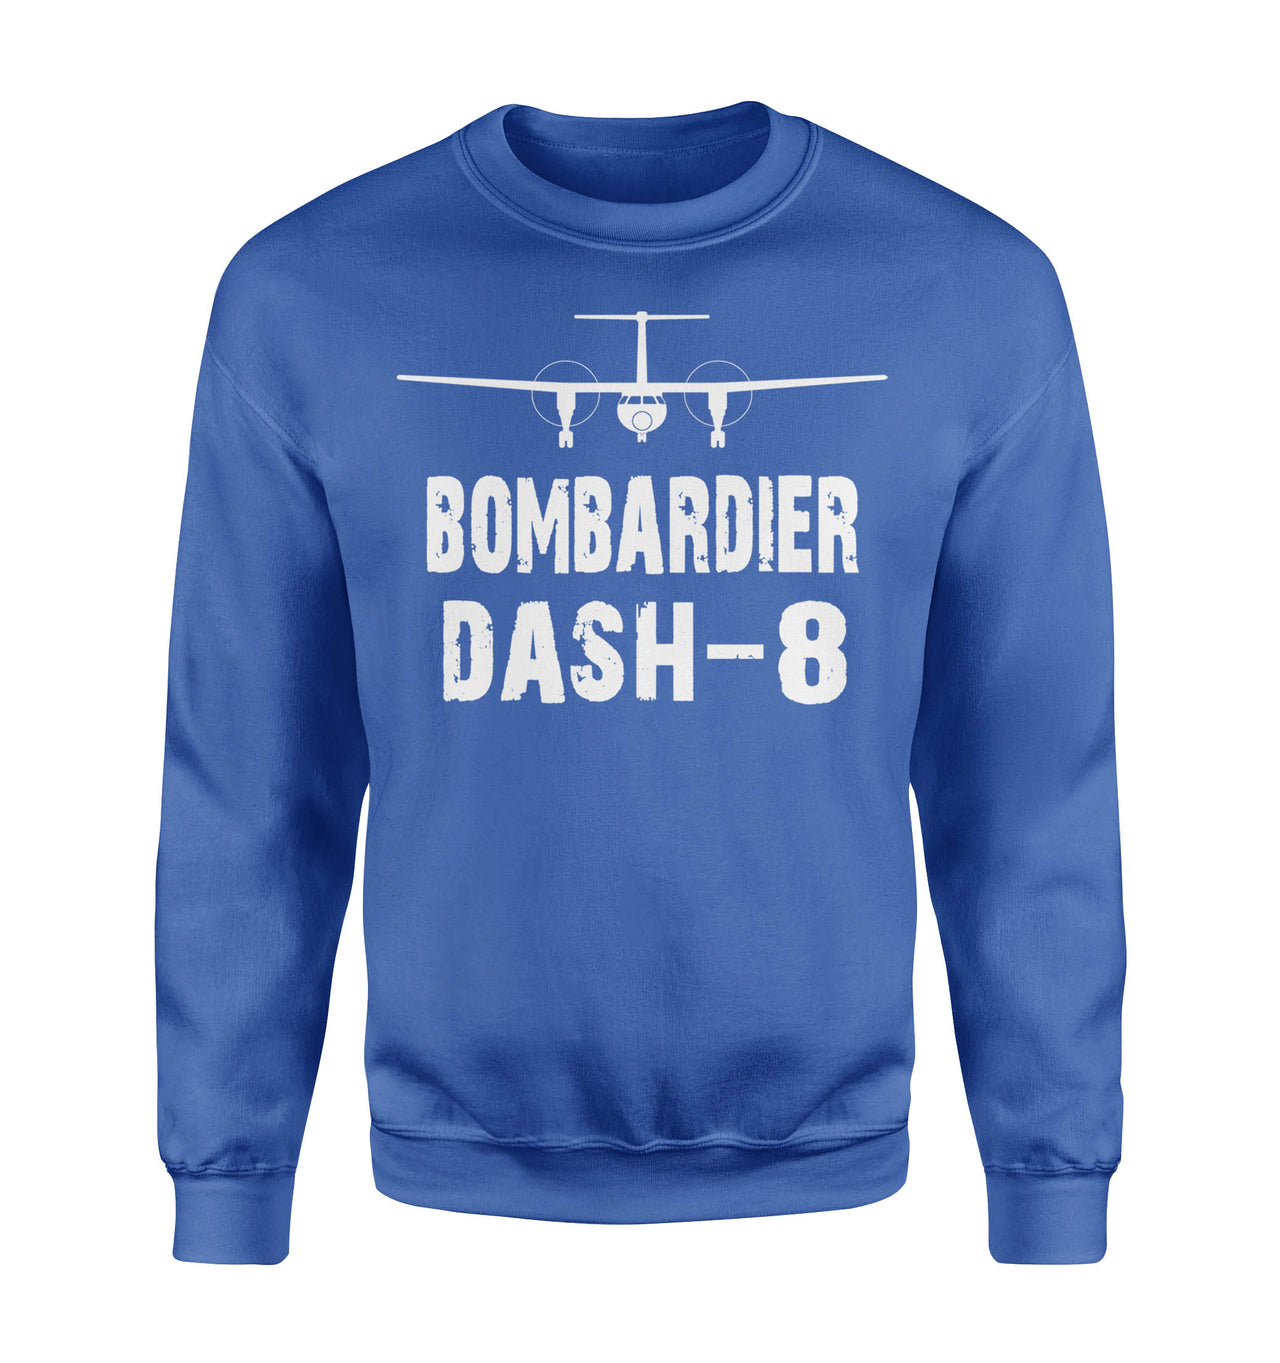 Bombardier Dash-8 & Plane Designed Sweatshirts